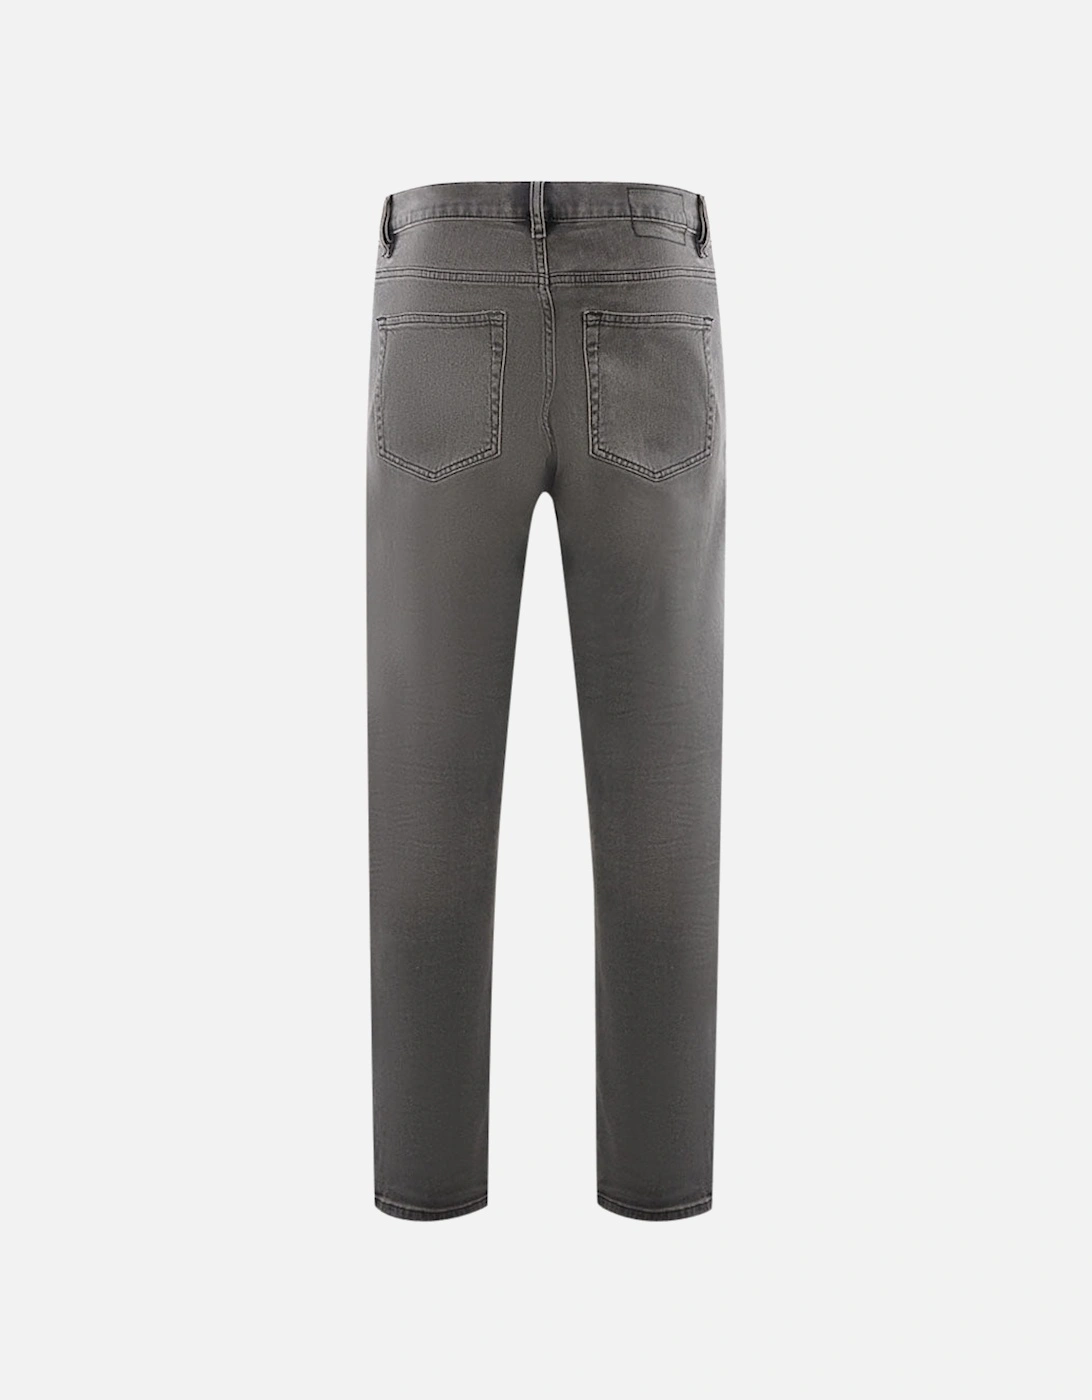 D-Viker 09D49 Grey Jeans